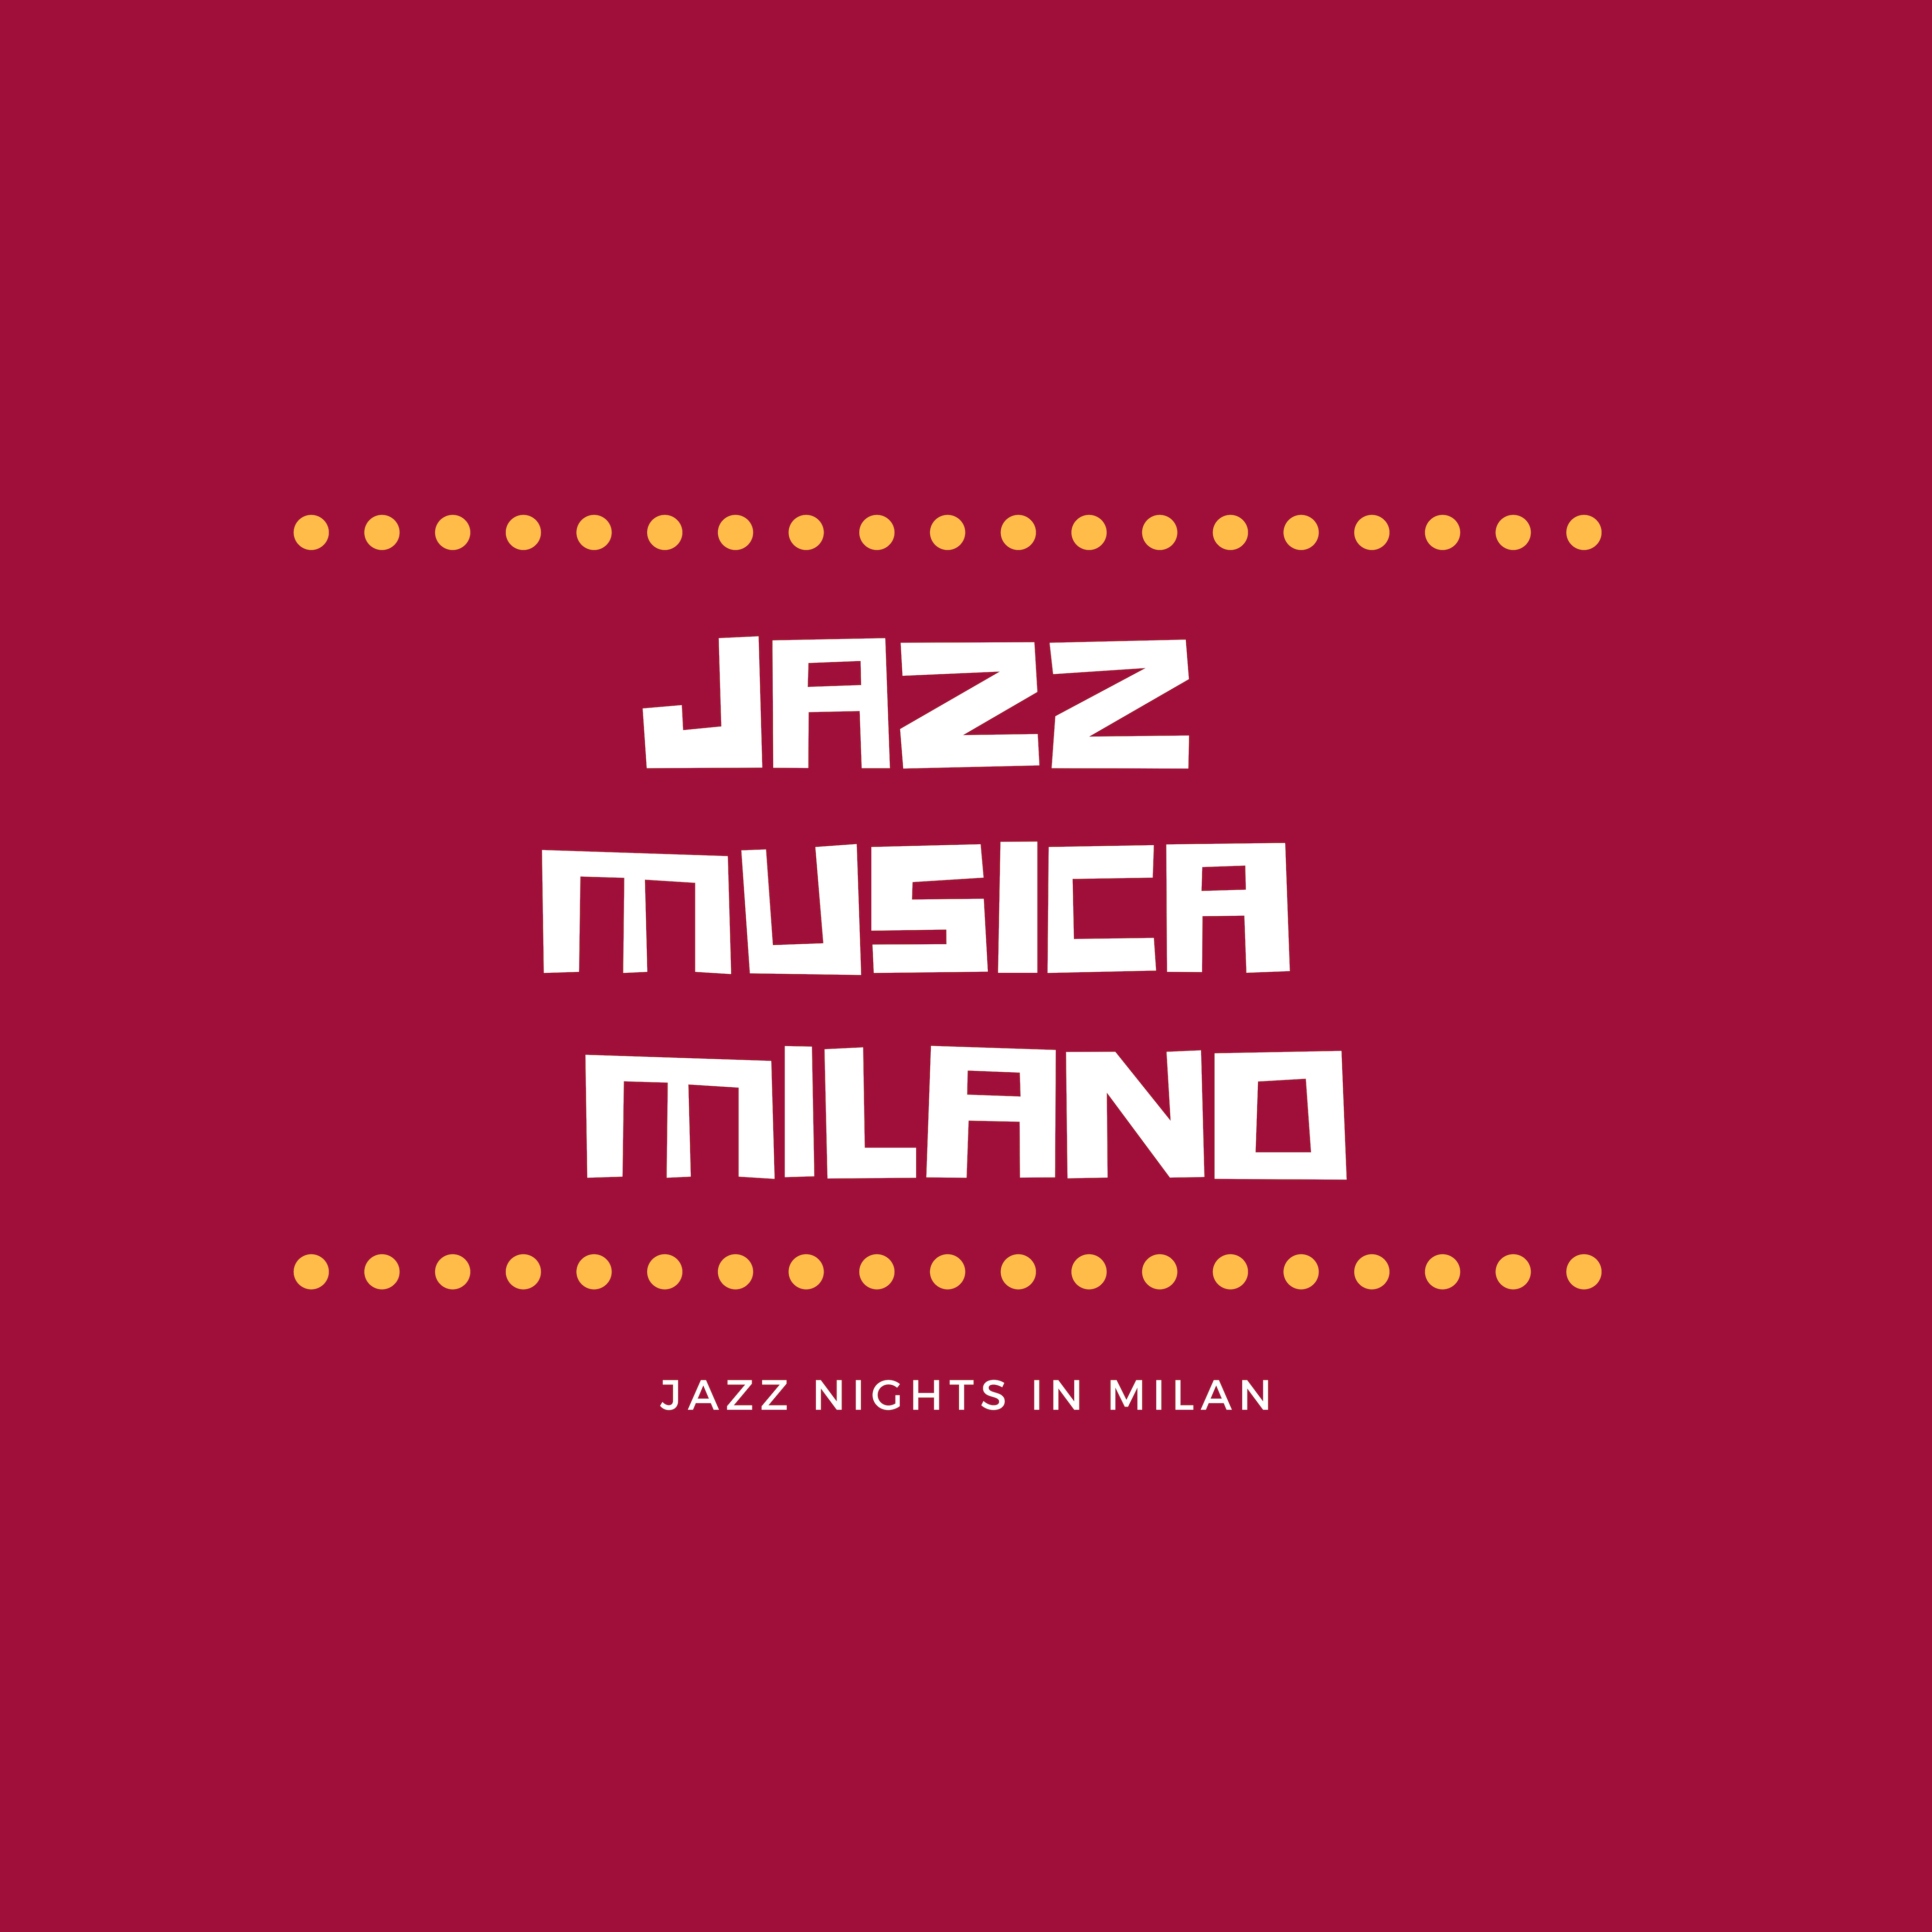 Milano Jazz Days